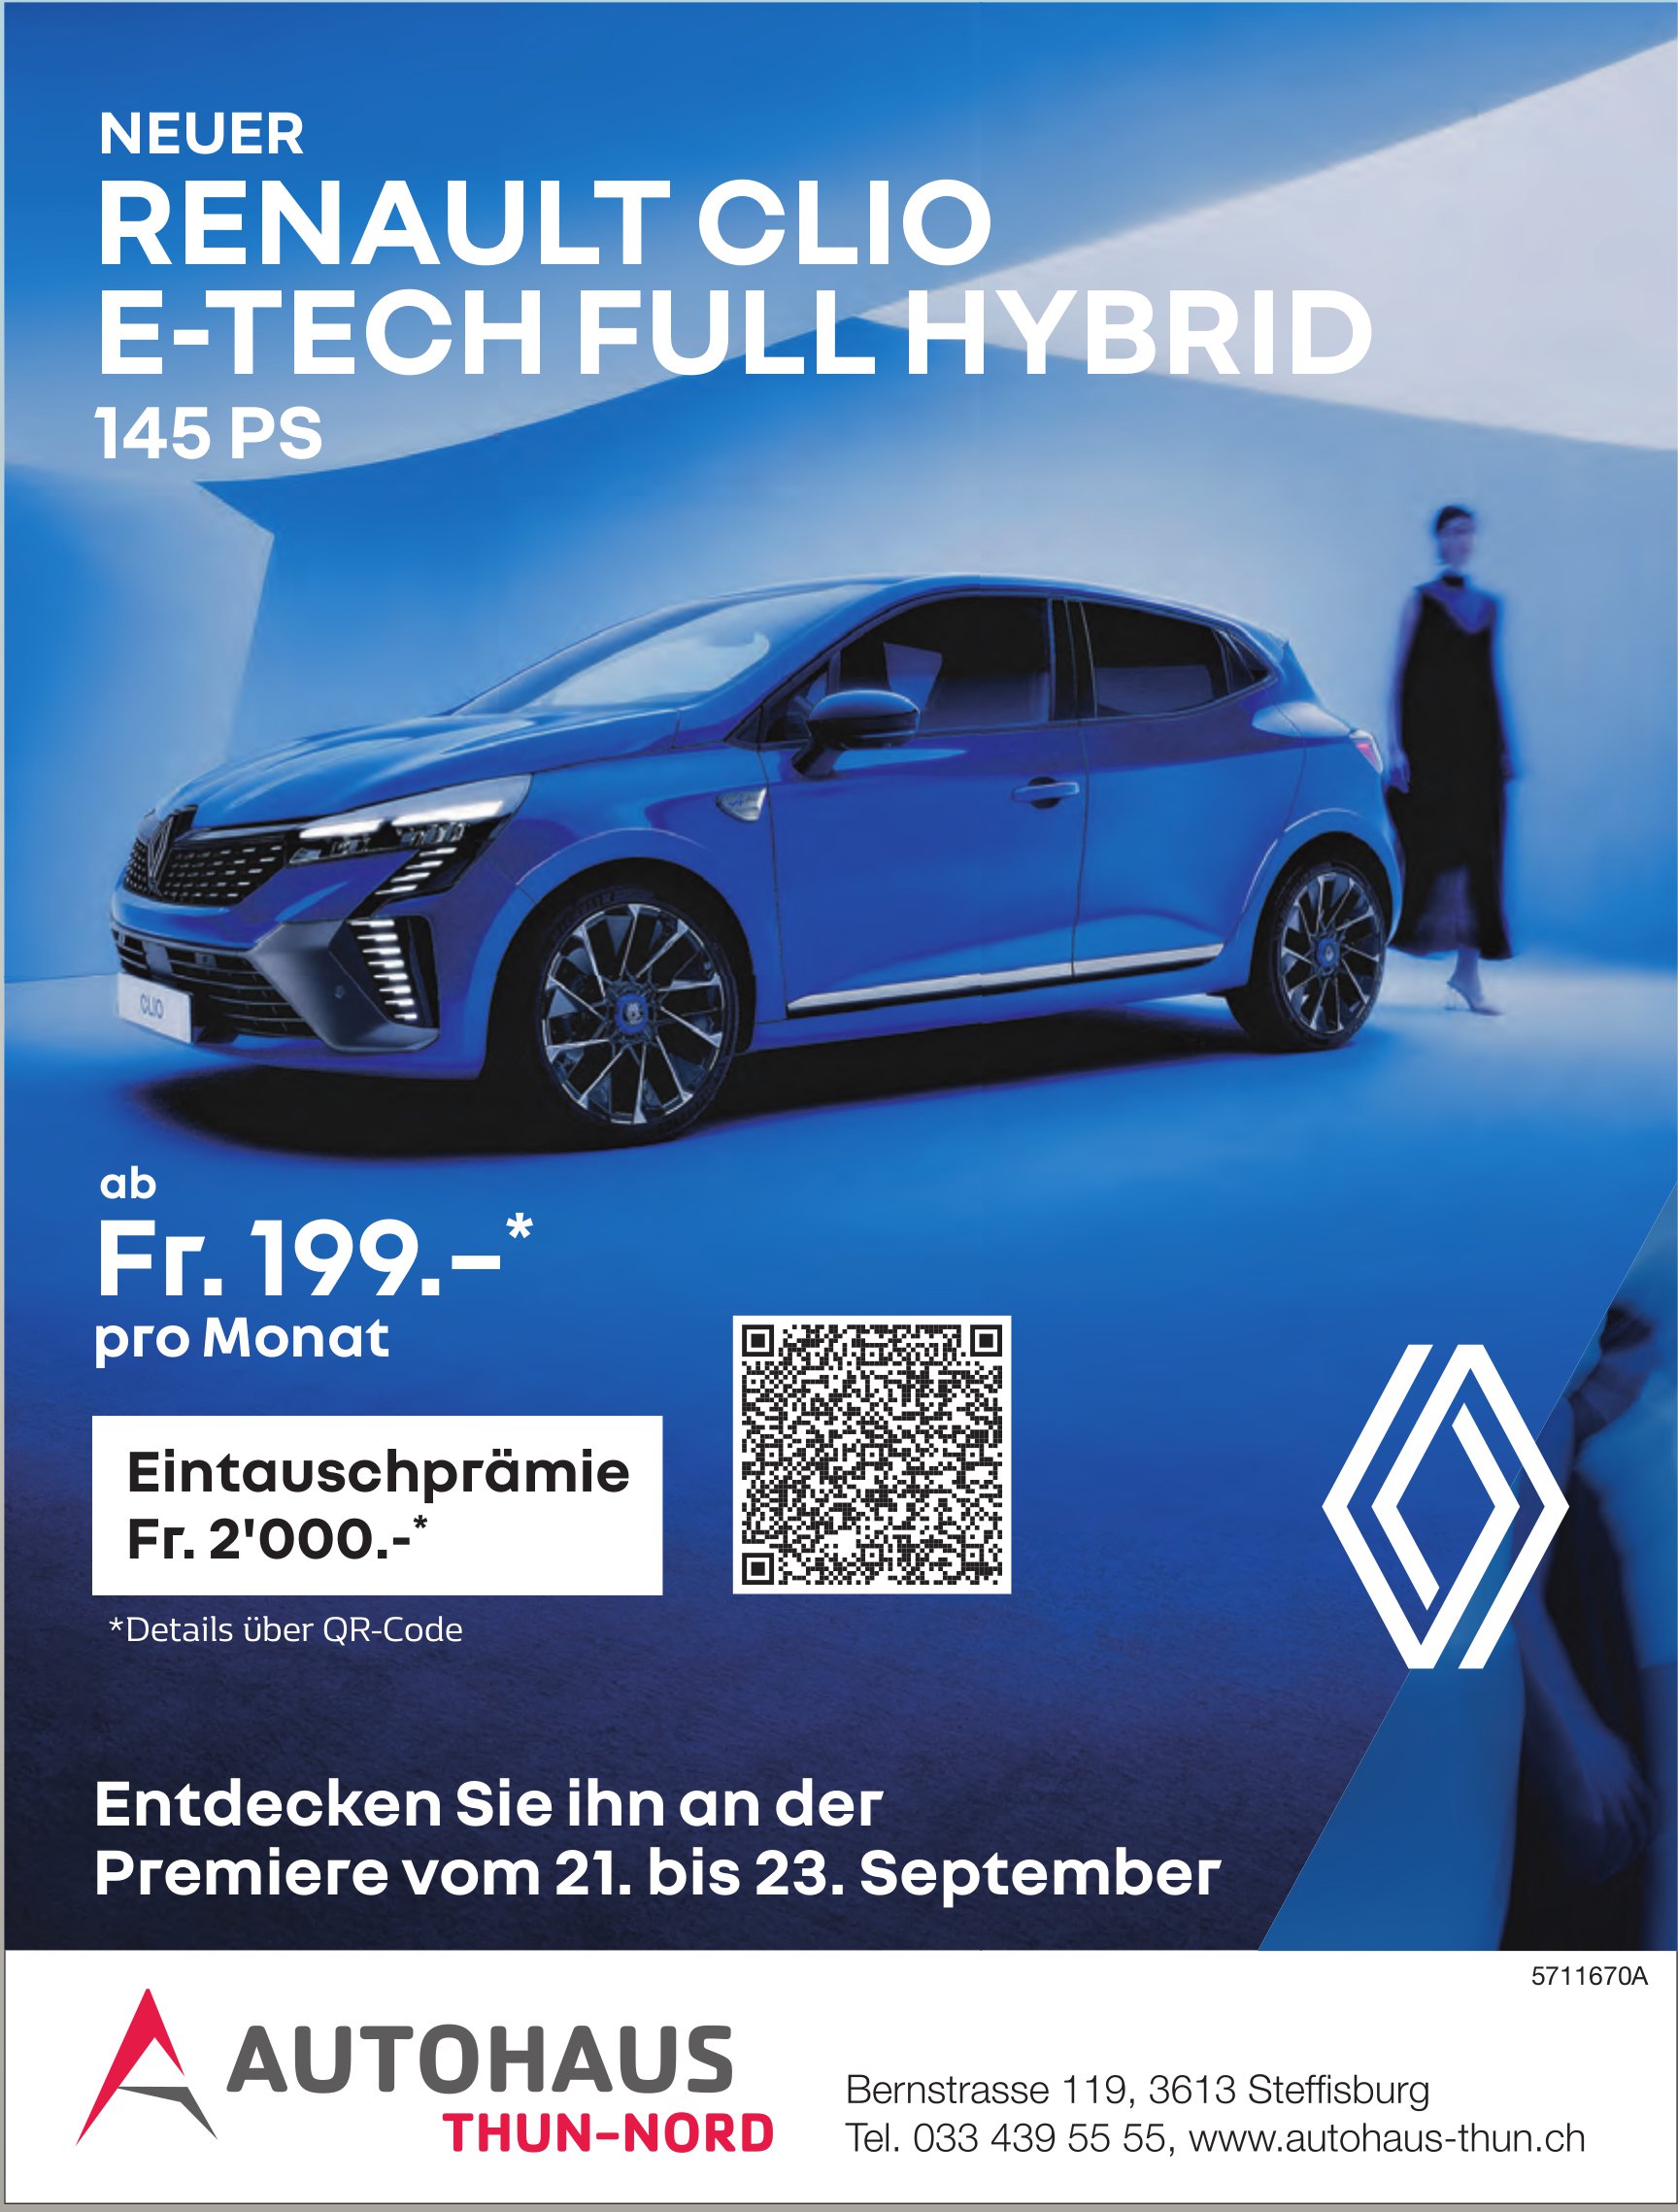 Autohaus Thun-Nord, Steffisburg - Neuer Renault Clio E-Tech Full Hybrid 145 PS